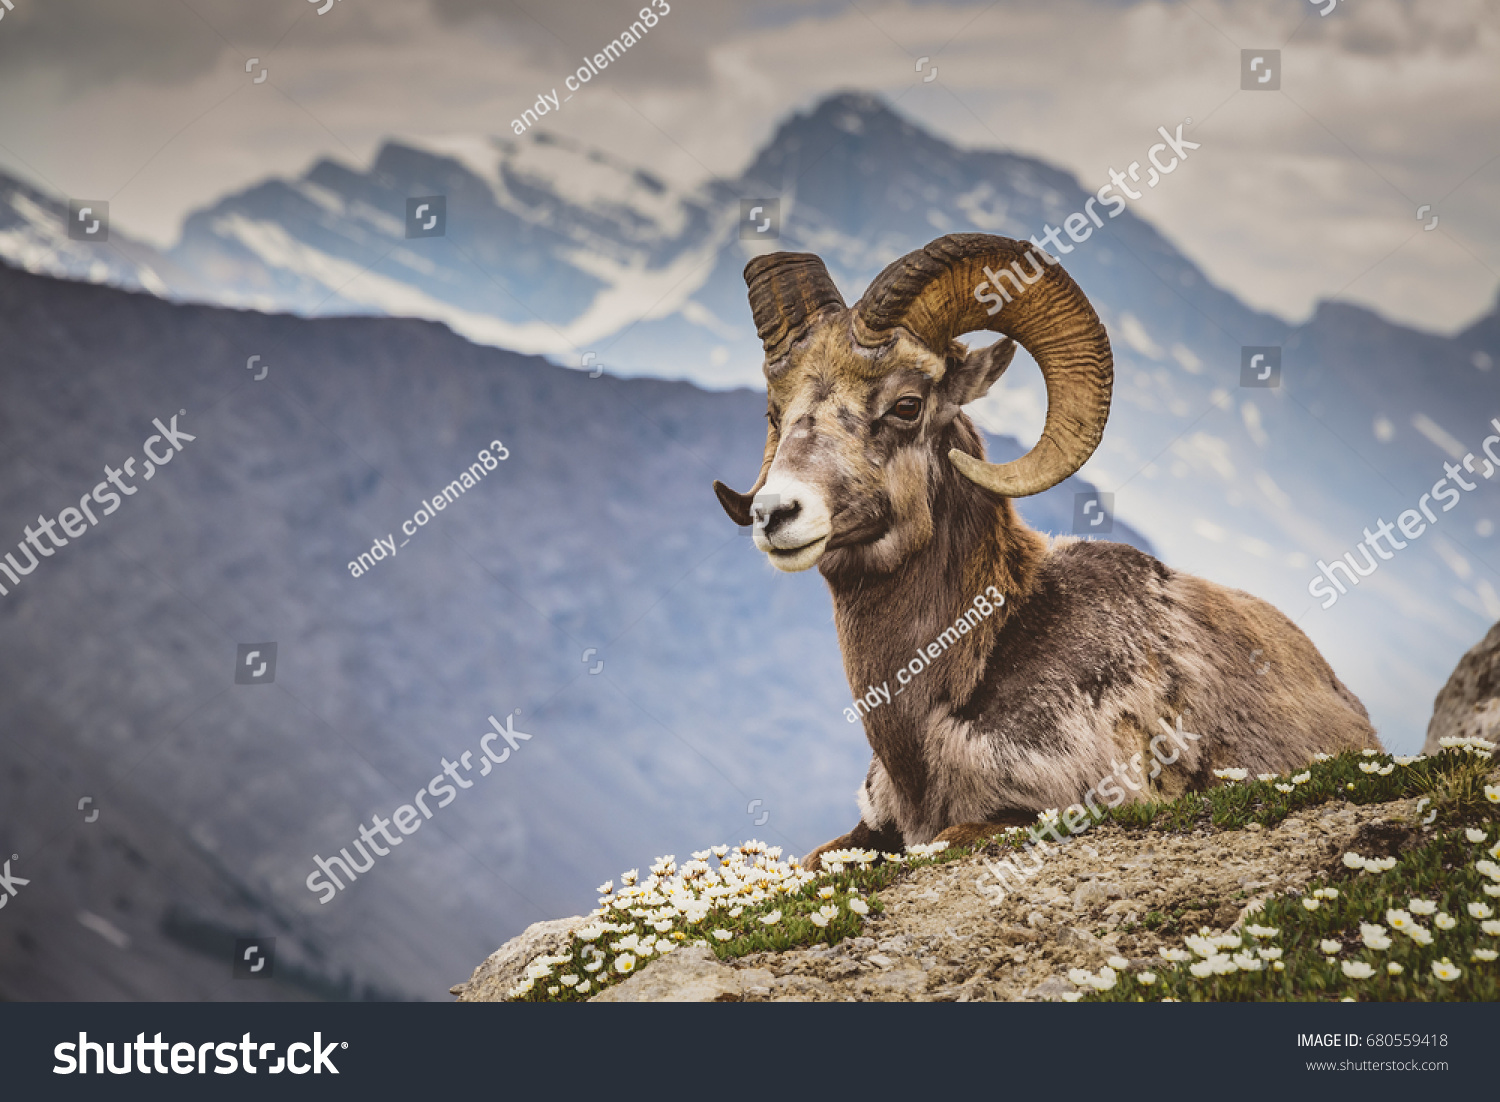 Big horn sheep sitting on mountain in Jasper, Wilcox Pass, Canada #680559418